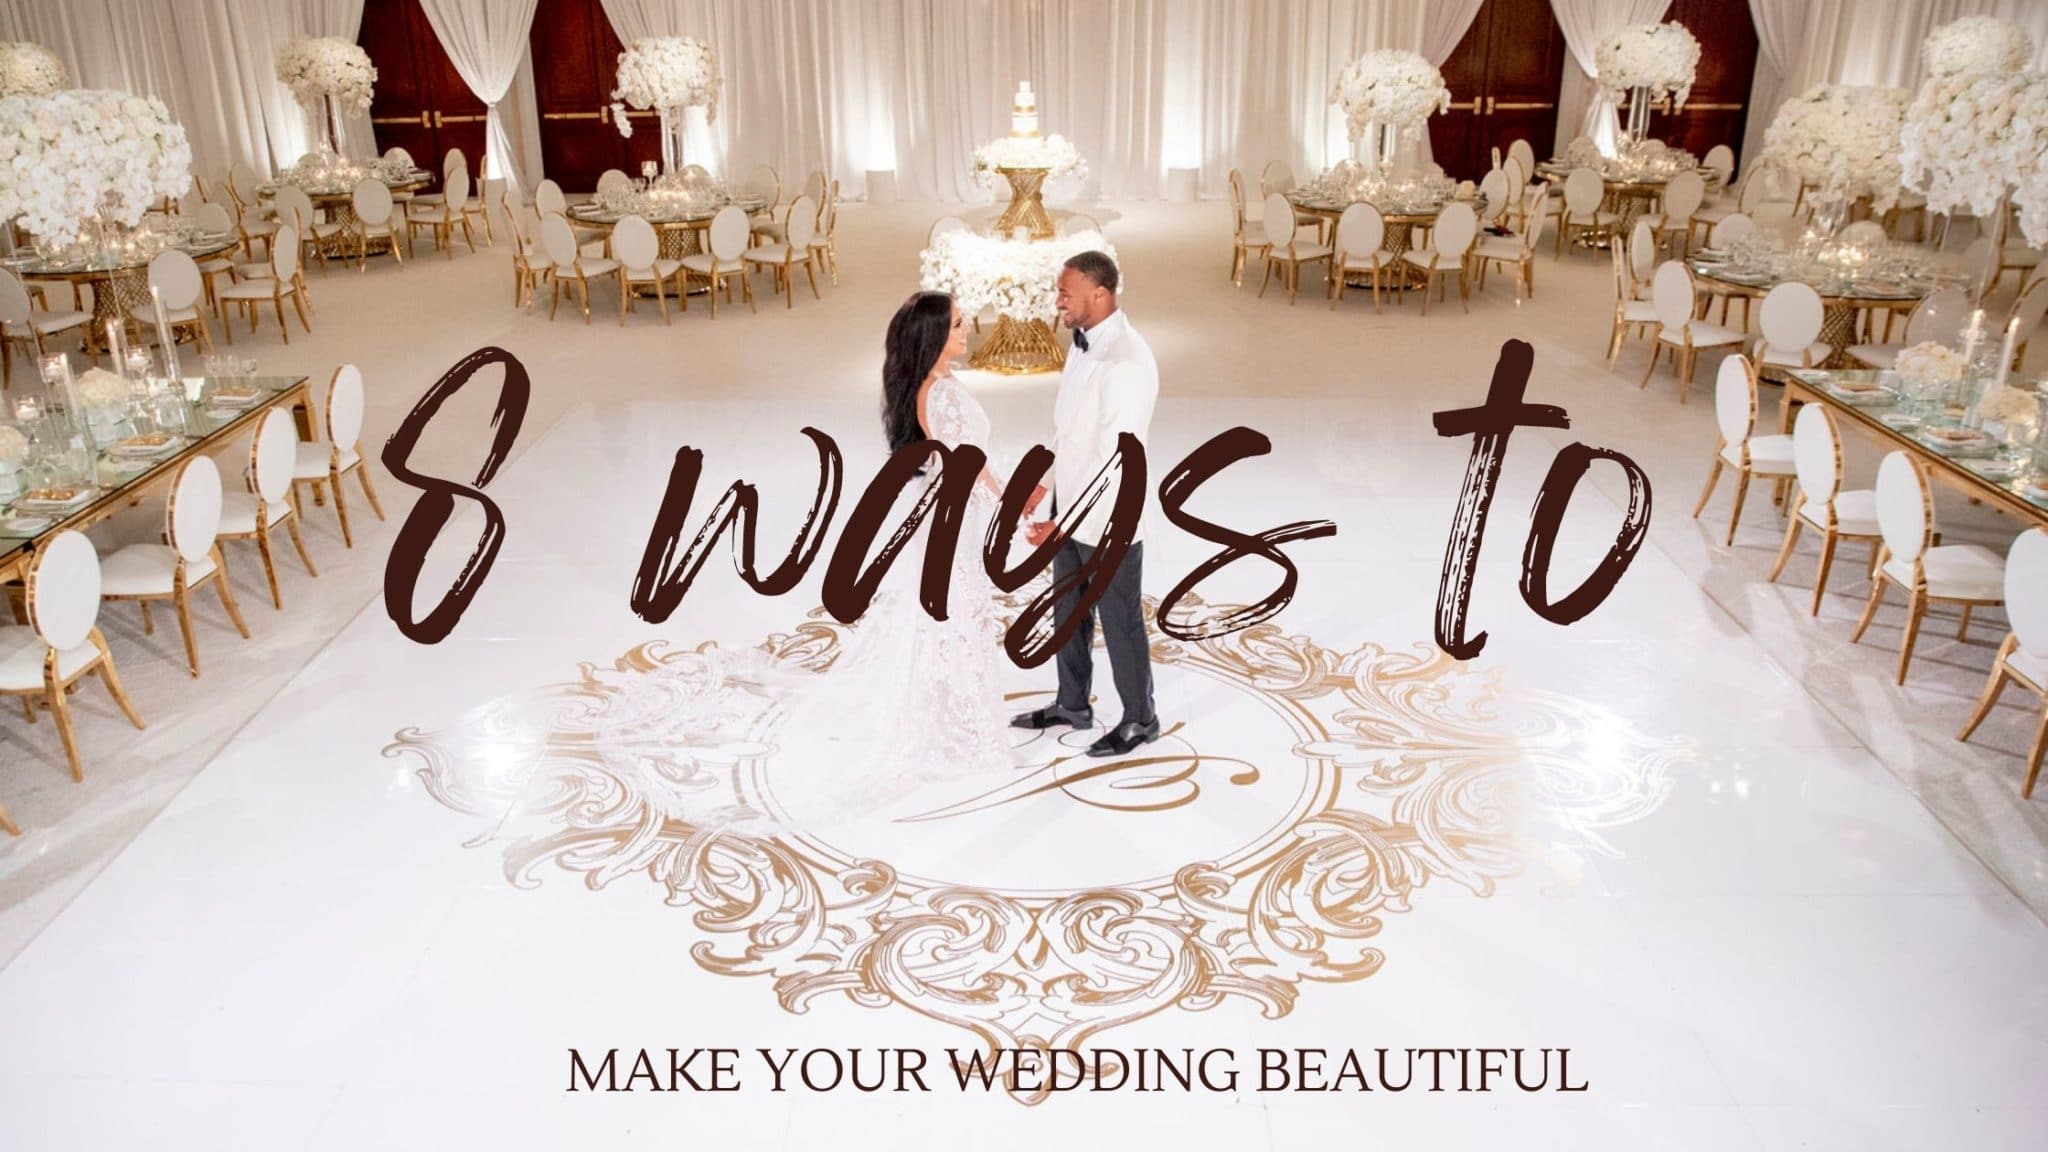 8 Ways to make your wedding beautiful